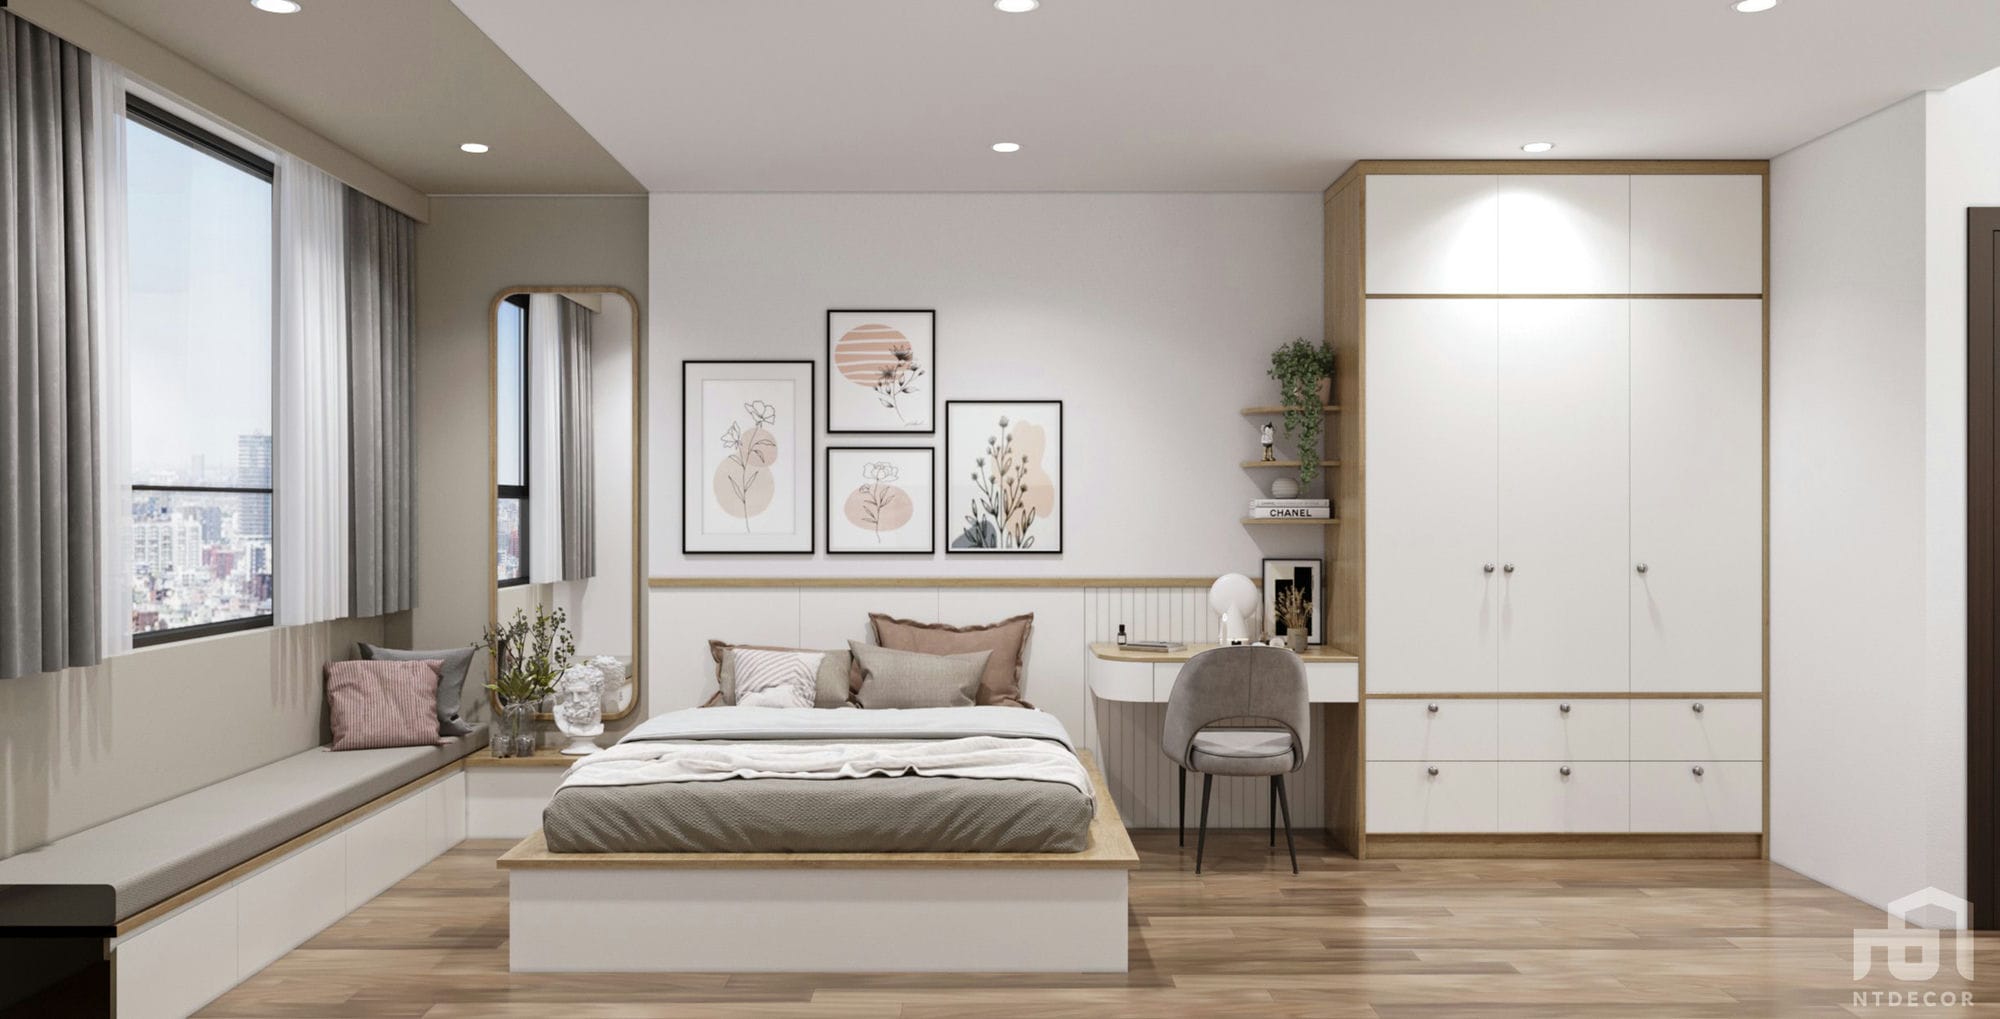 Bedroom 3D Design of C-Sky View Apartment | NTDecor